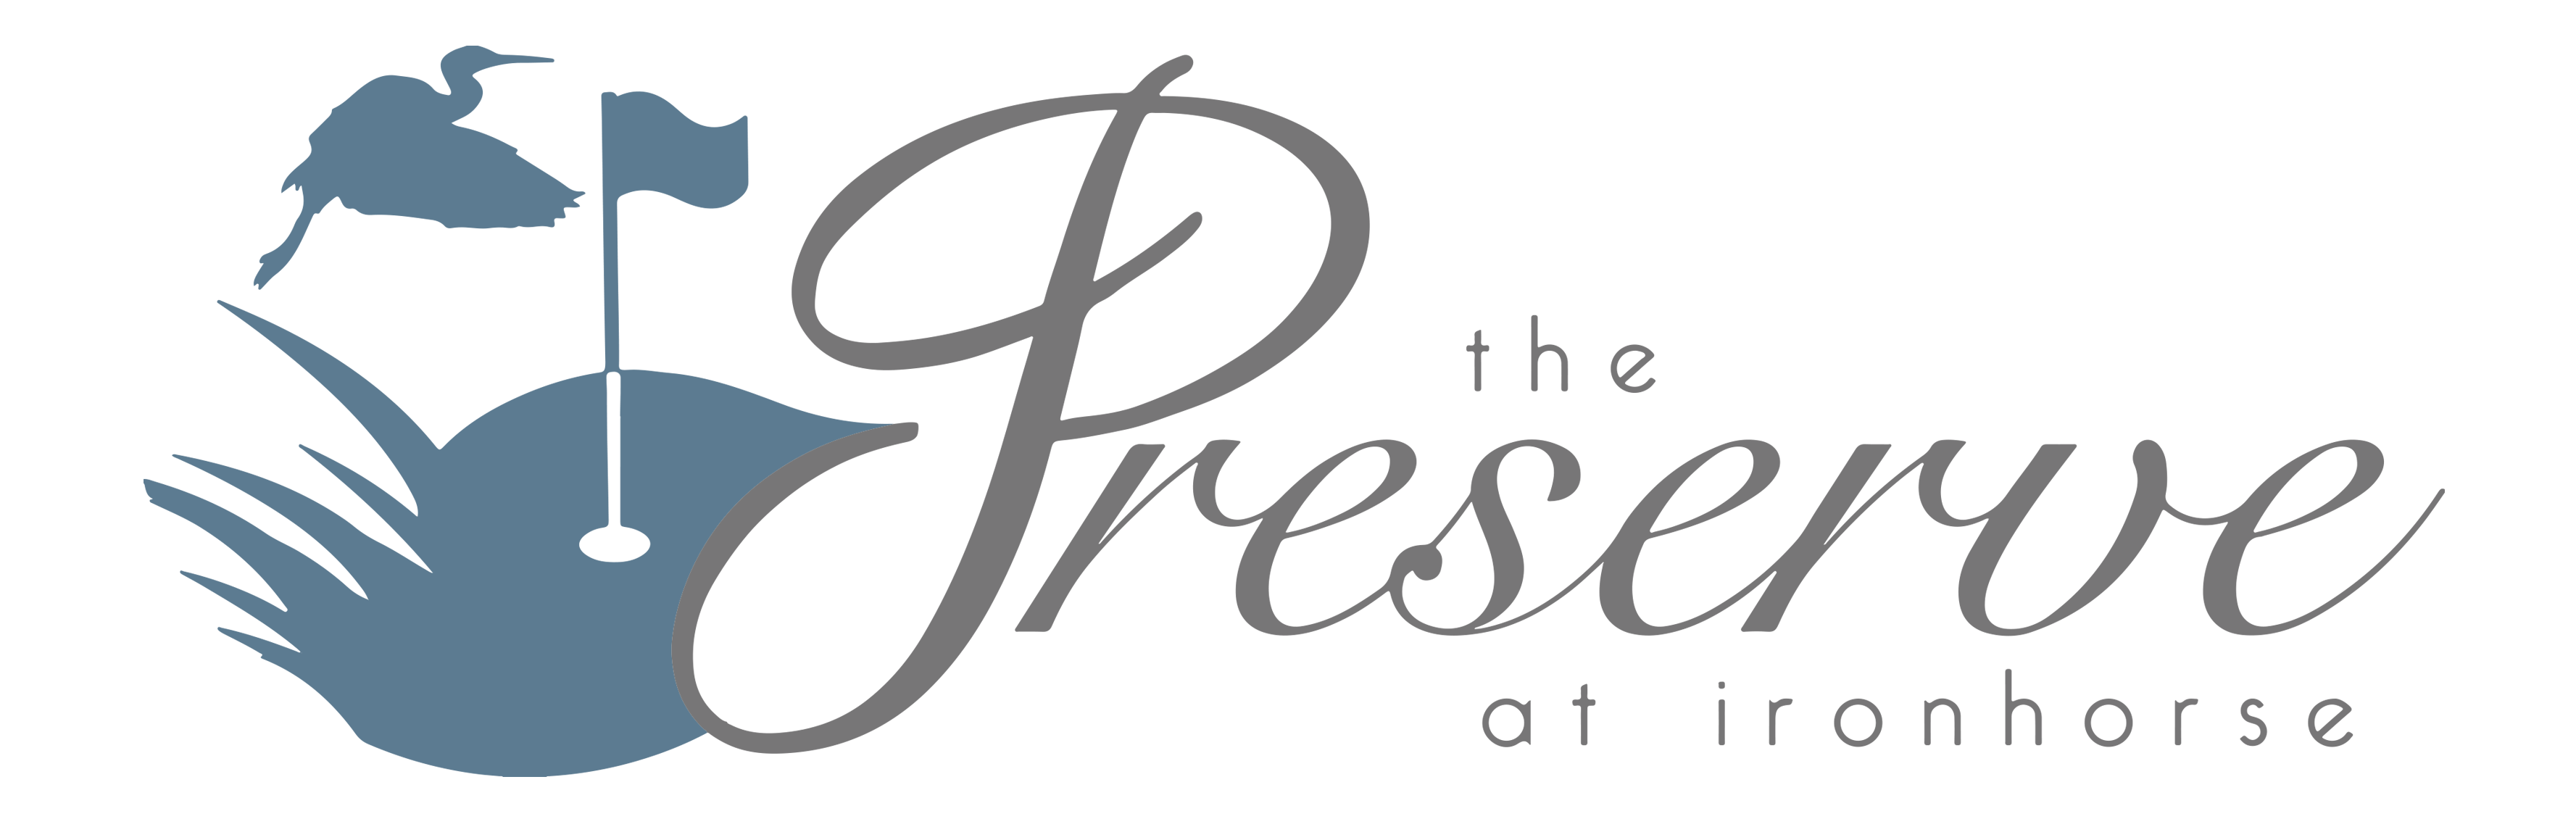 Preserve Logo - The Preserve at Ironhorse